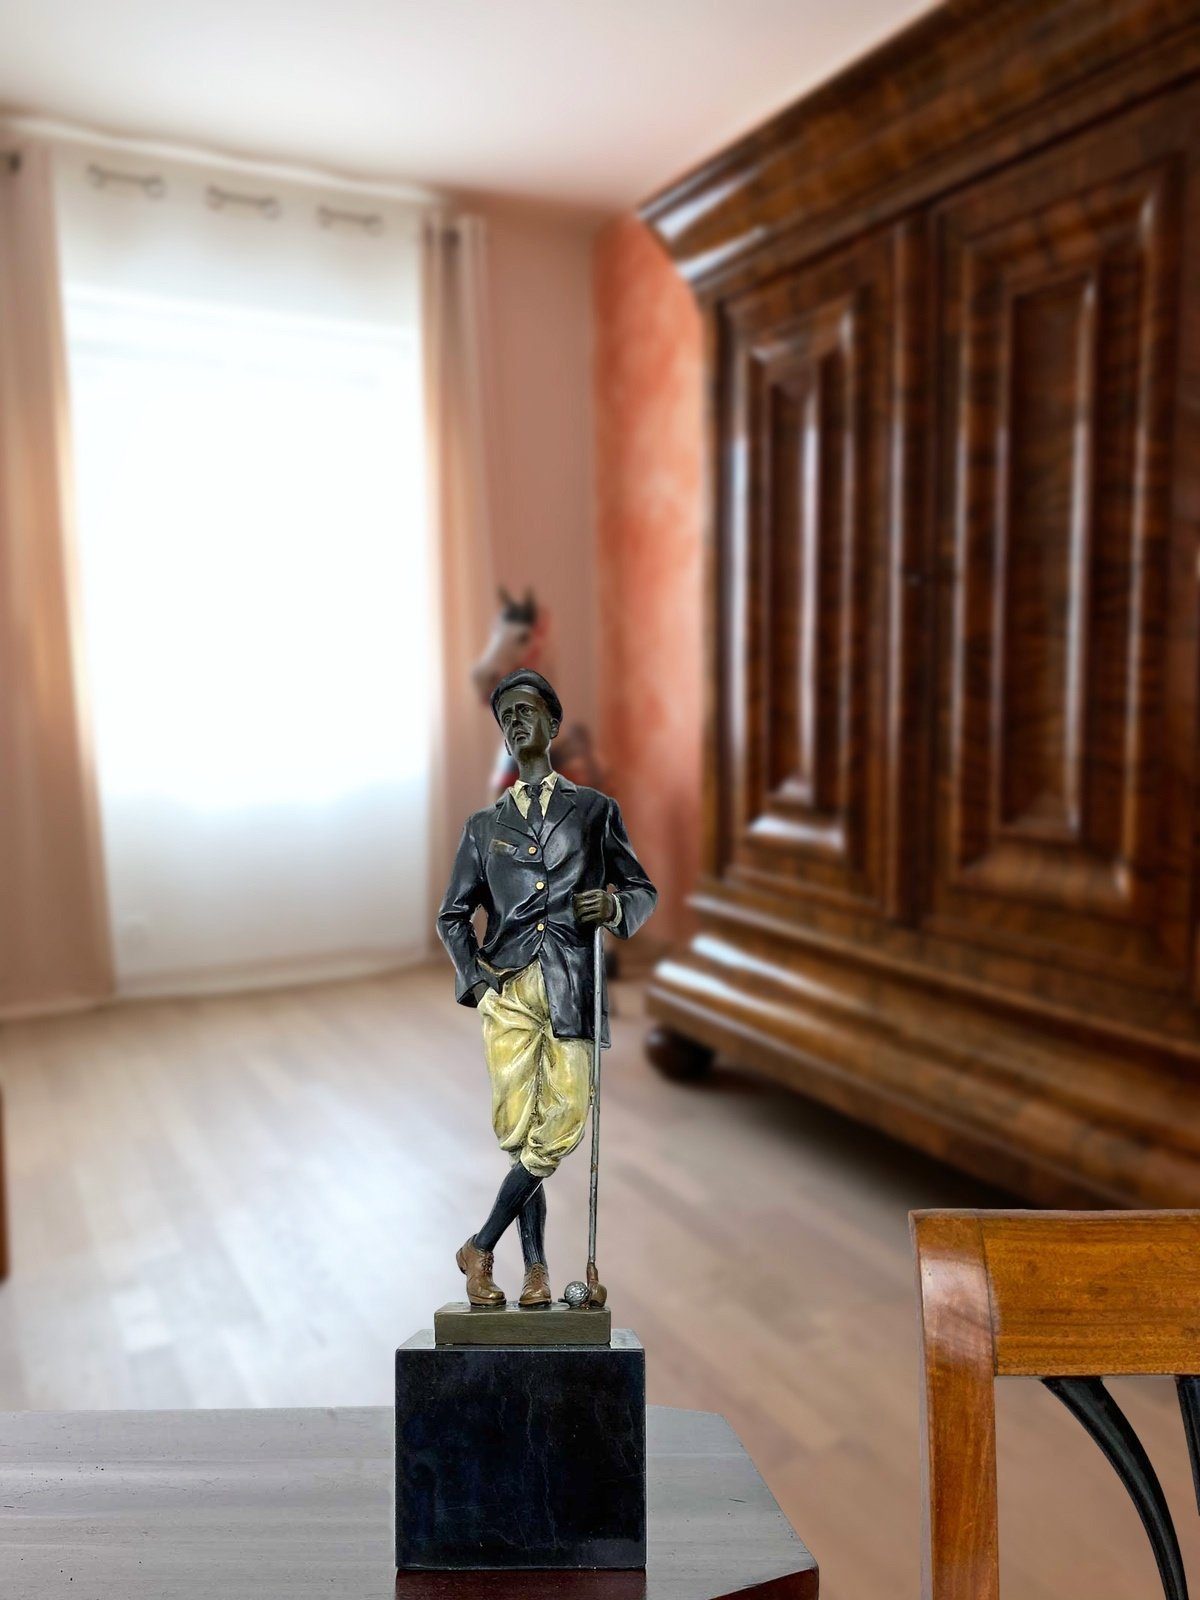 Aubaho Skulptur Bronzeskulptur Golf Figur Statue Golfer Antik-Stil Bronze 32c Pokal im